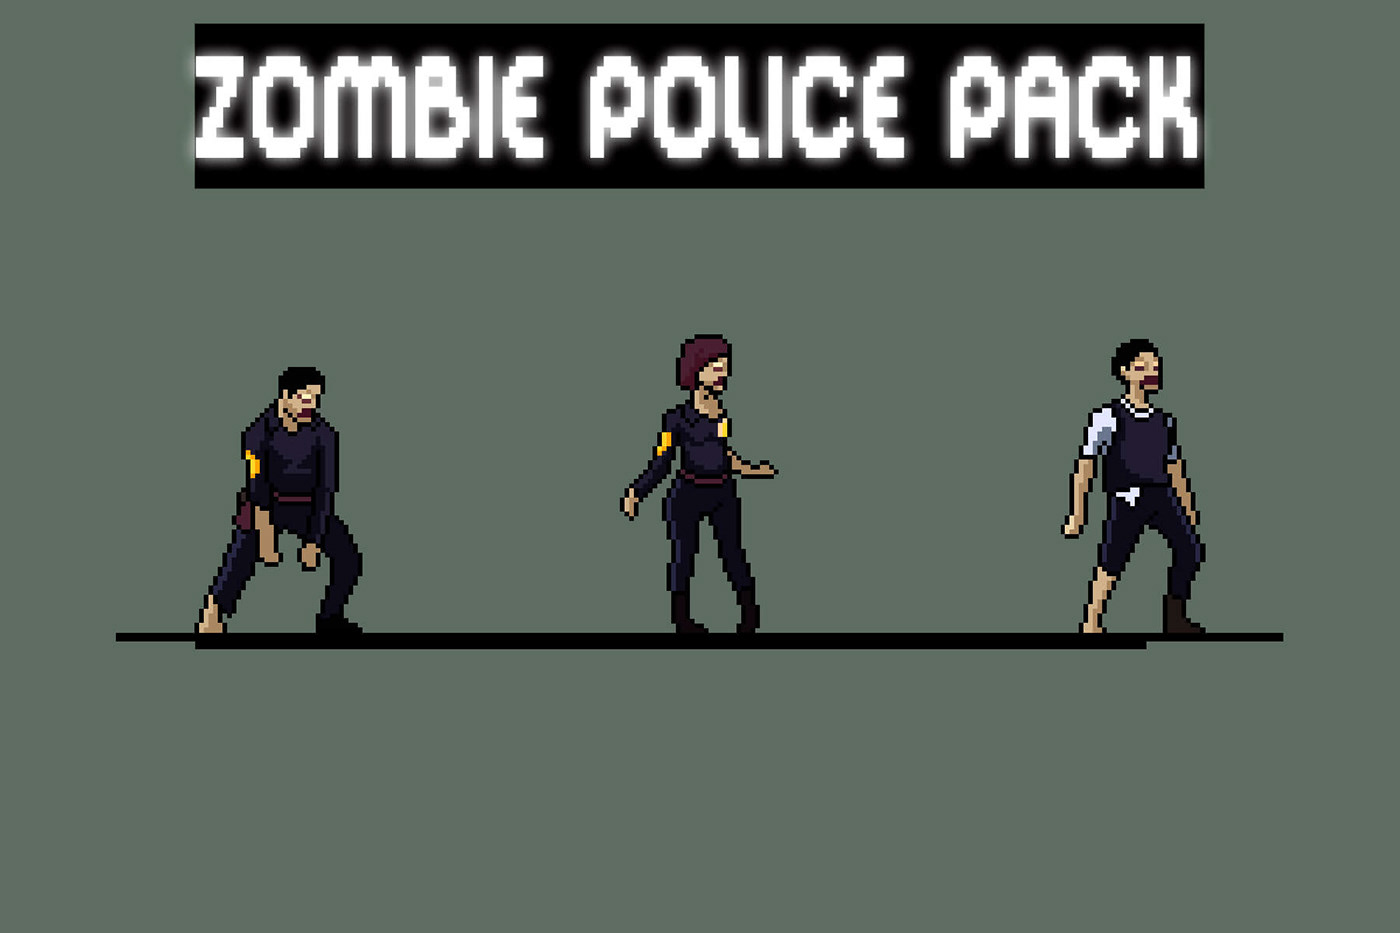 art asset assets Character game indie pixelart spritesheet zombie Policeman